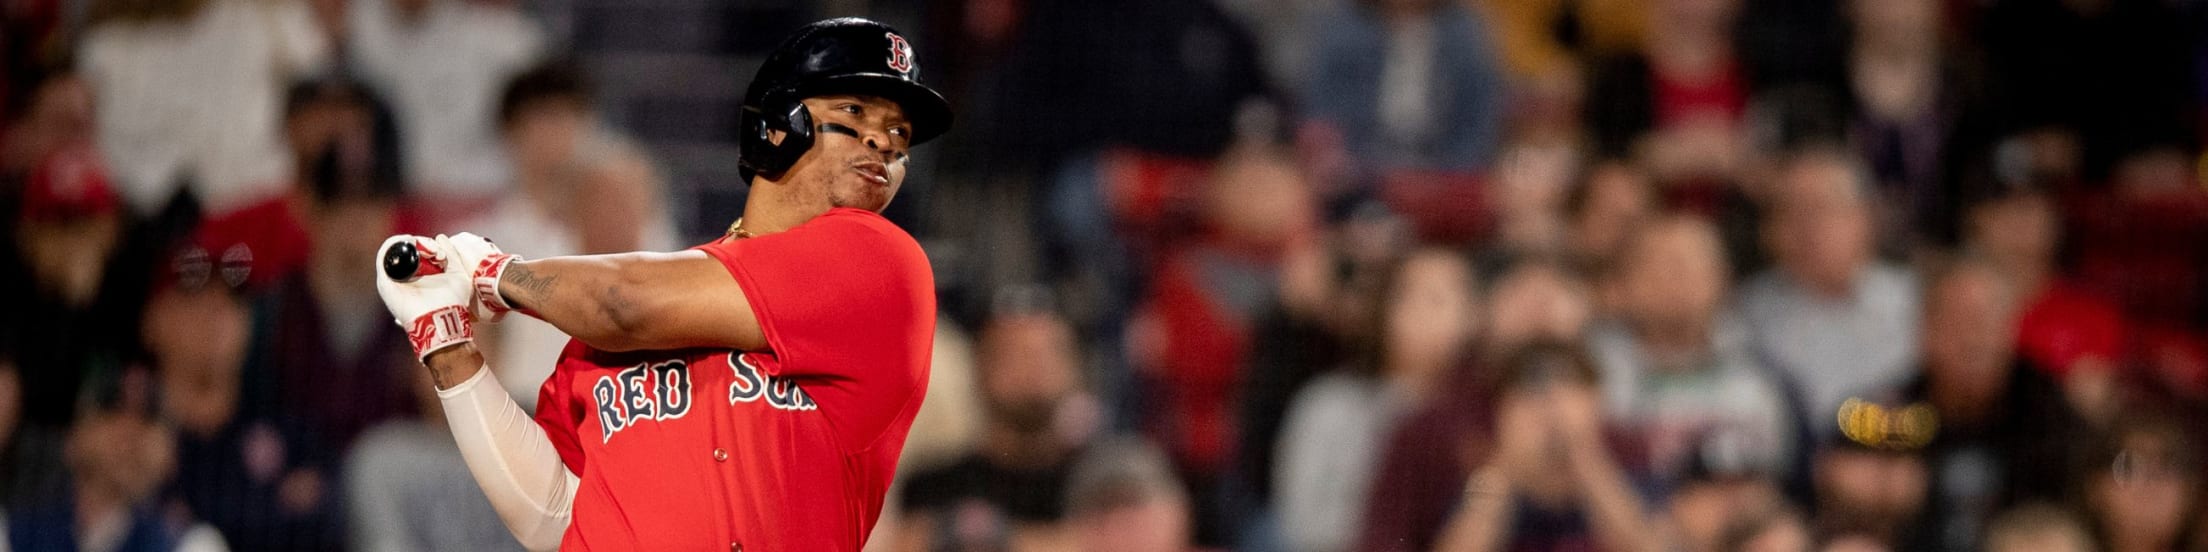 Red Sox Announce Ticket Price Increase For 2020 Season - CBS Boston